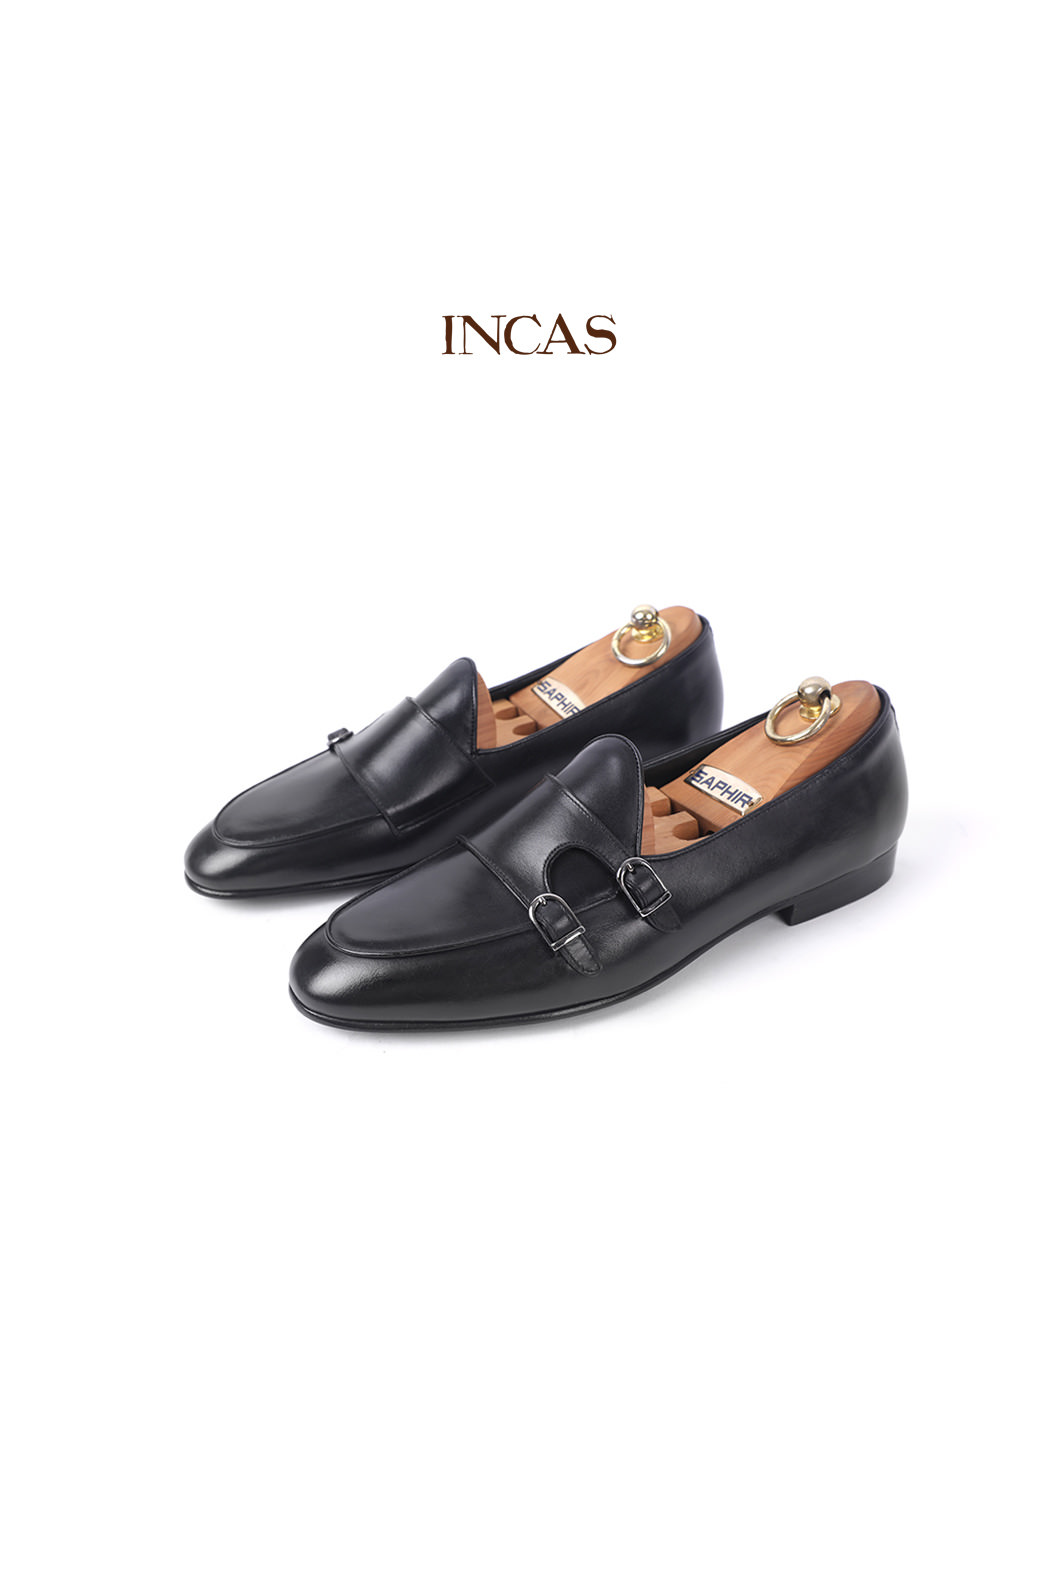 530 Artisan ITALY INCAS Shoes-Black